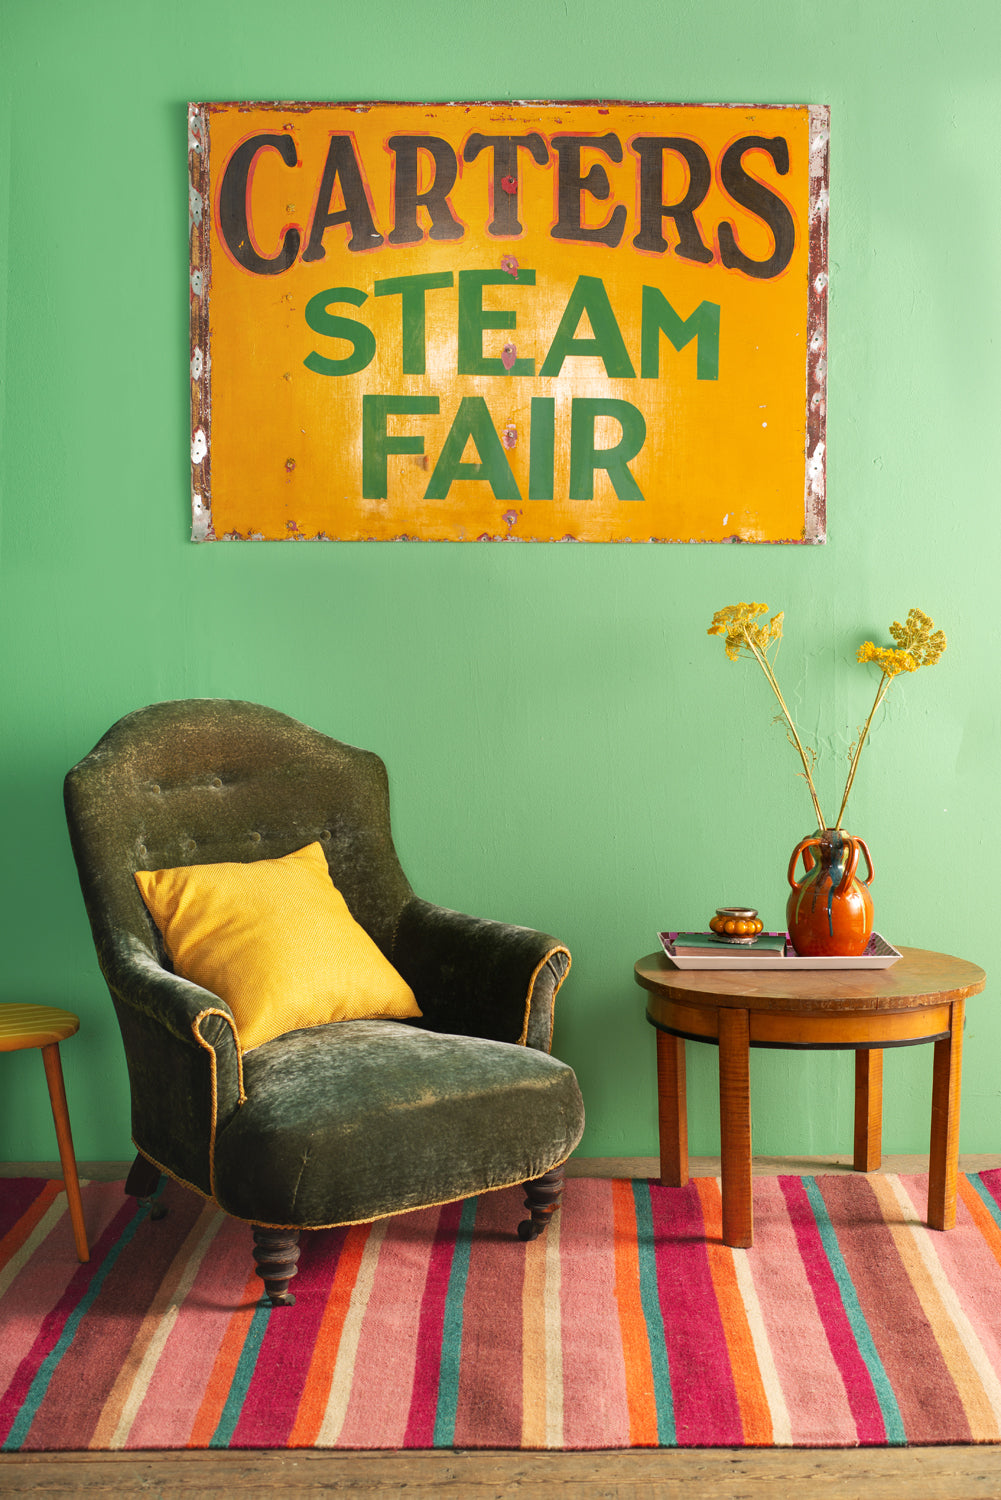 Carters Steam Fair Advertising Panel